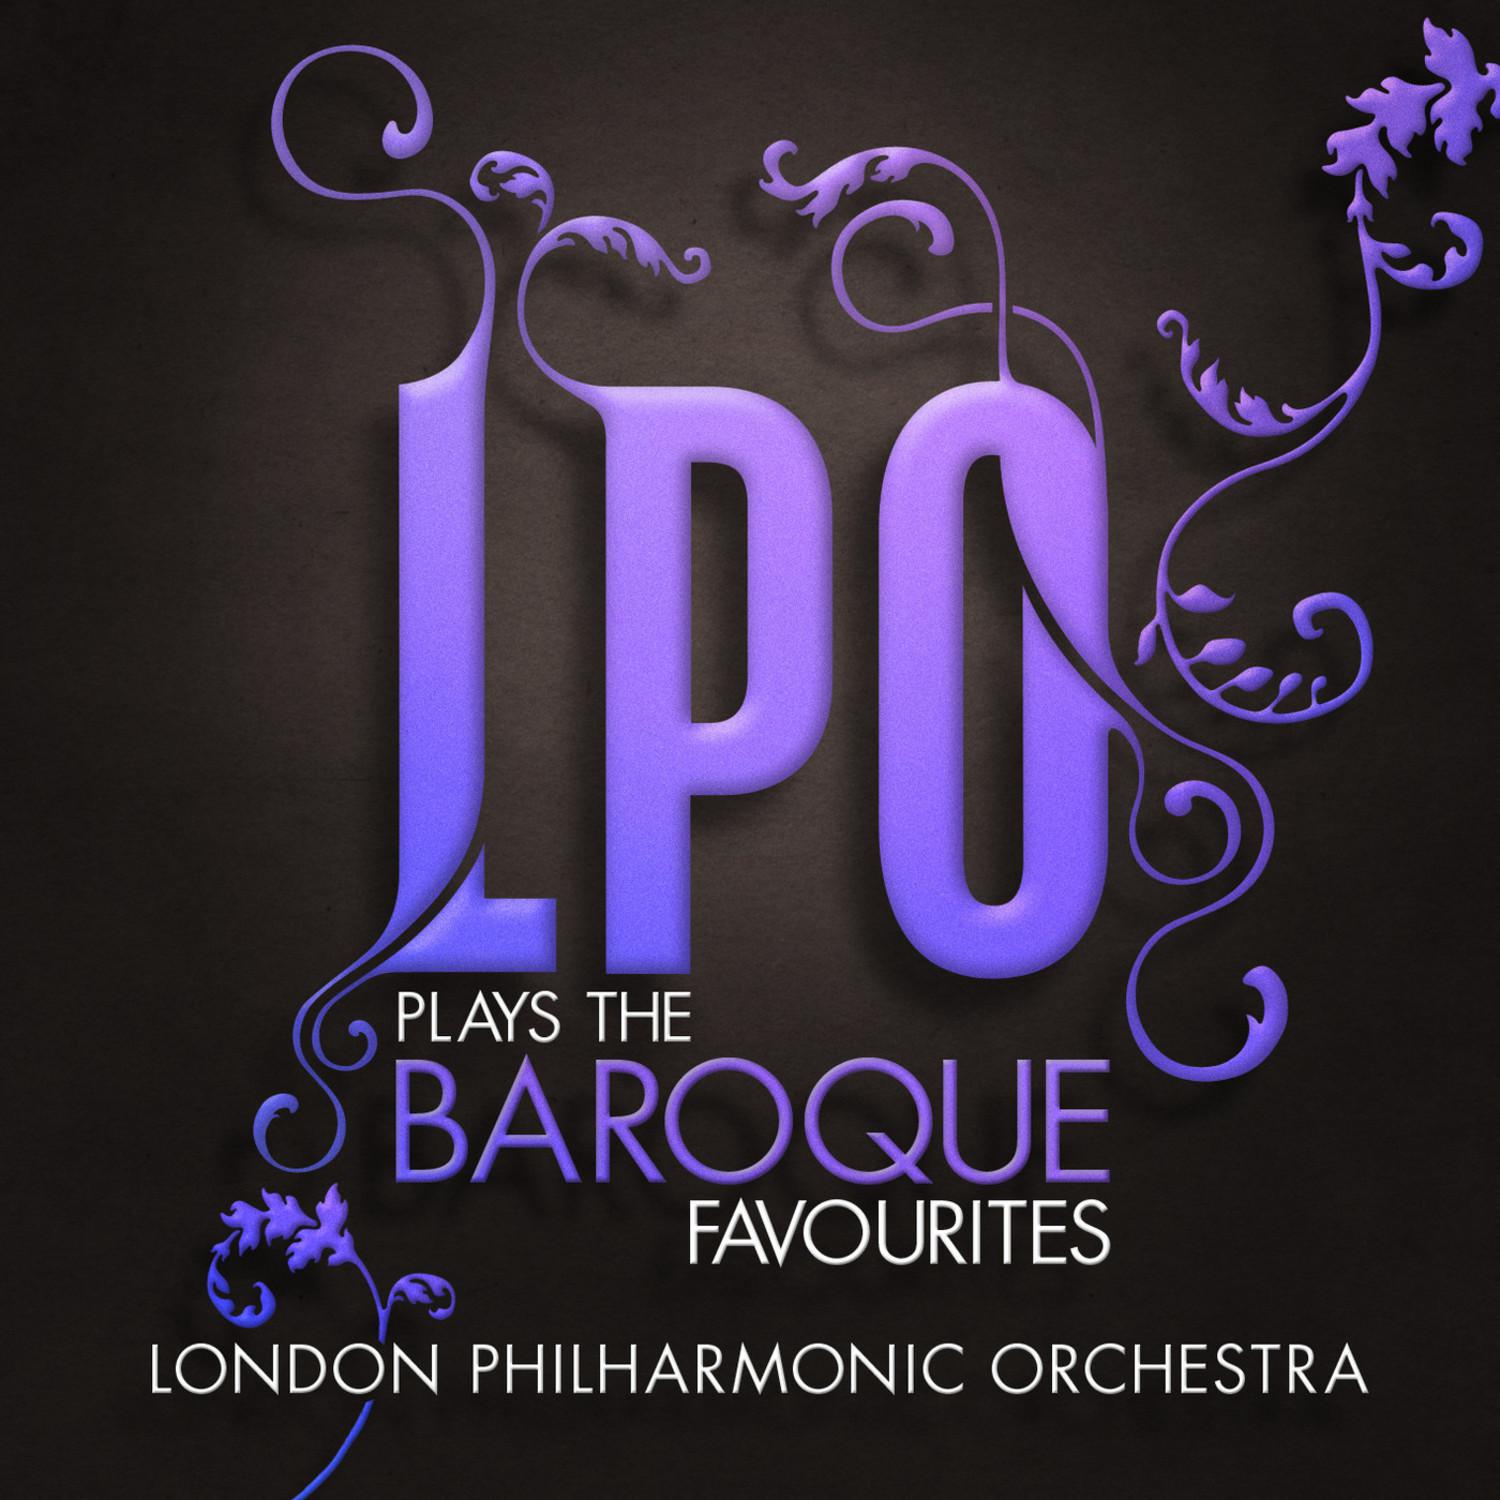 LPO plays the Baroque Favourites